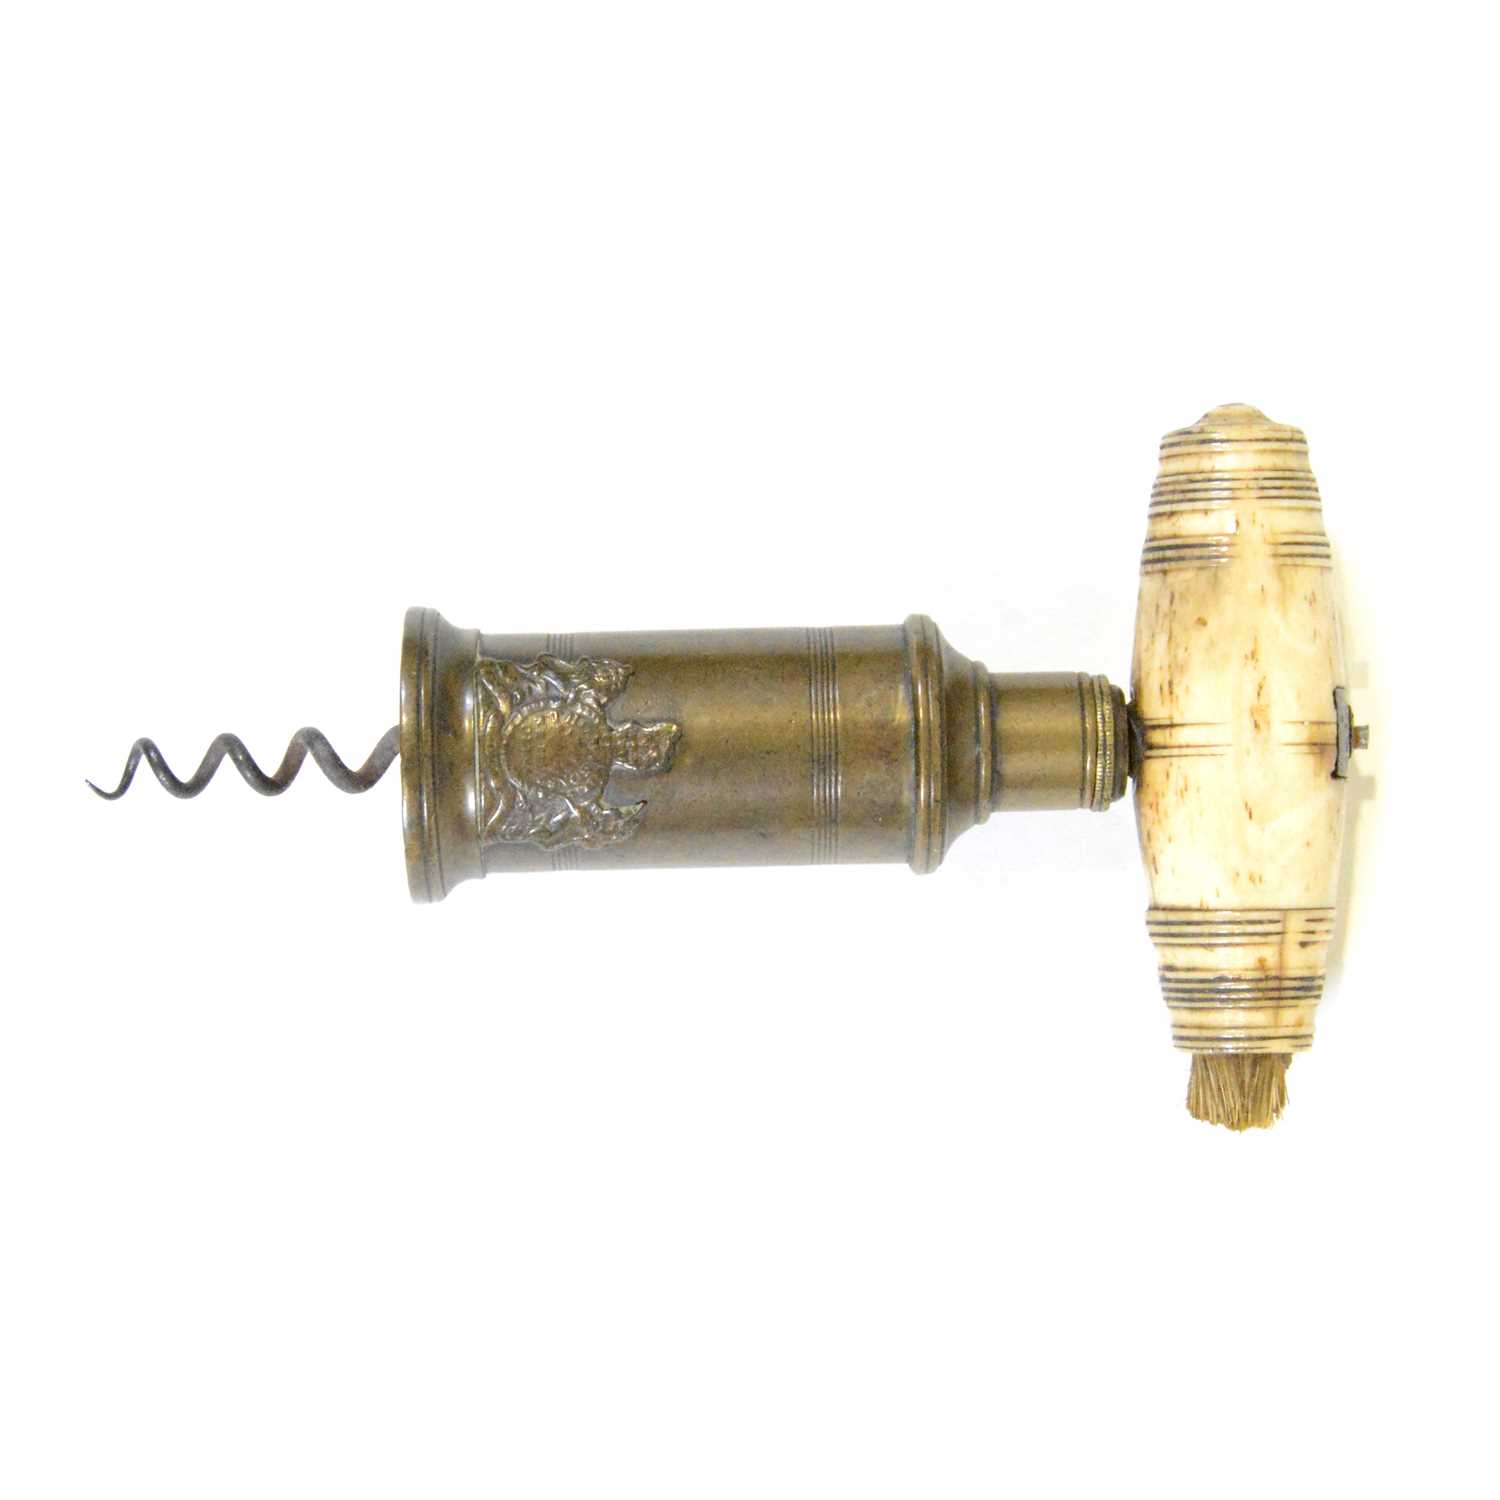 Lot 6 - Thomason Patent corkscrew